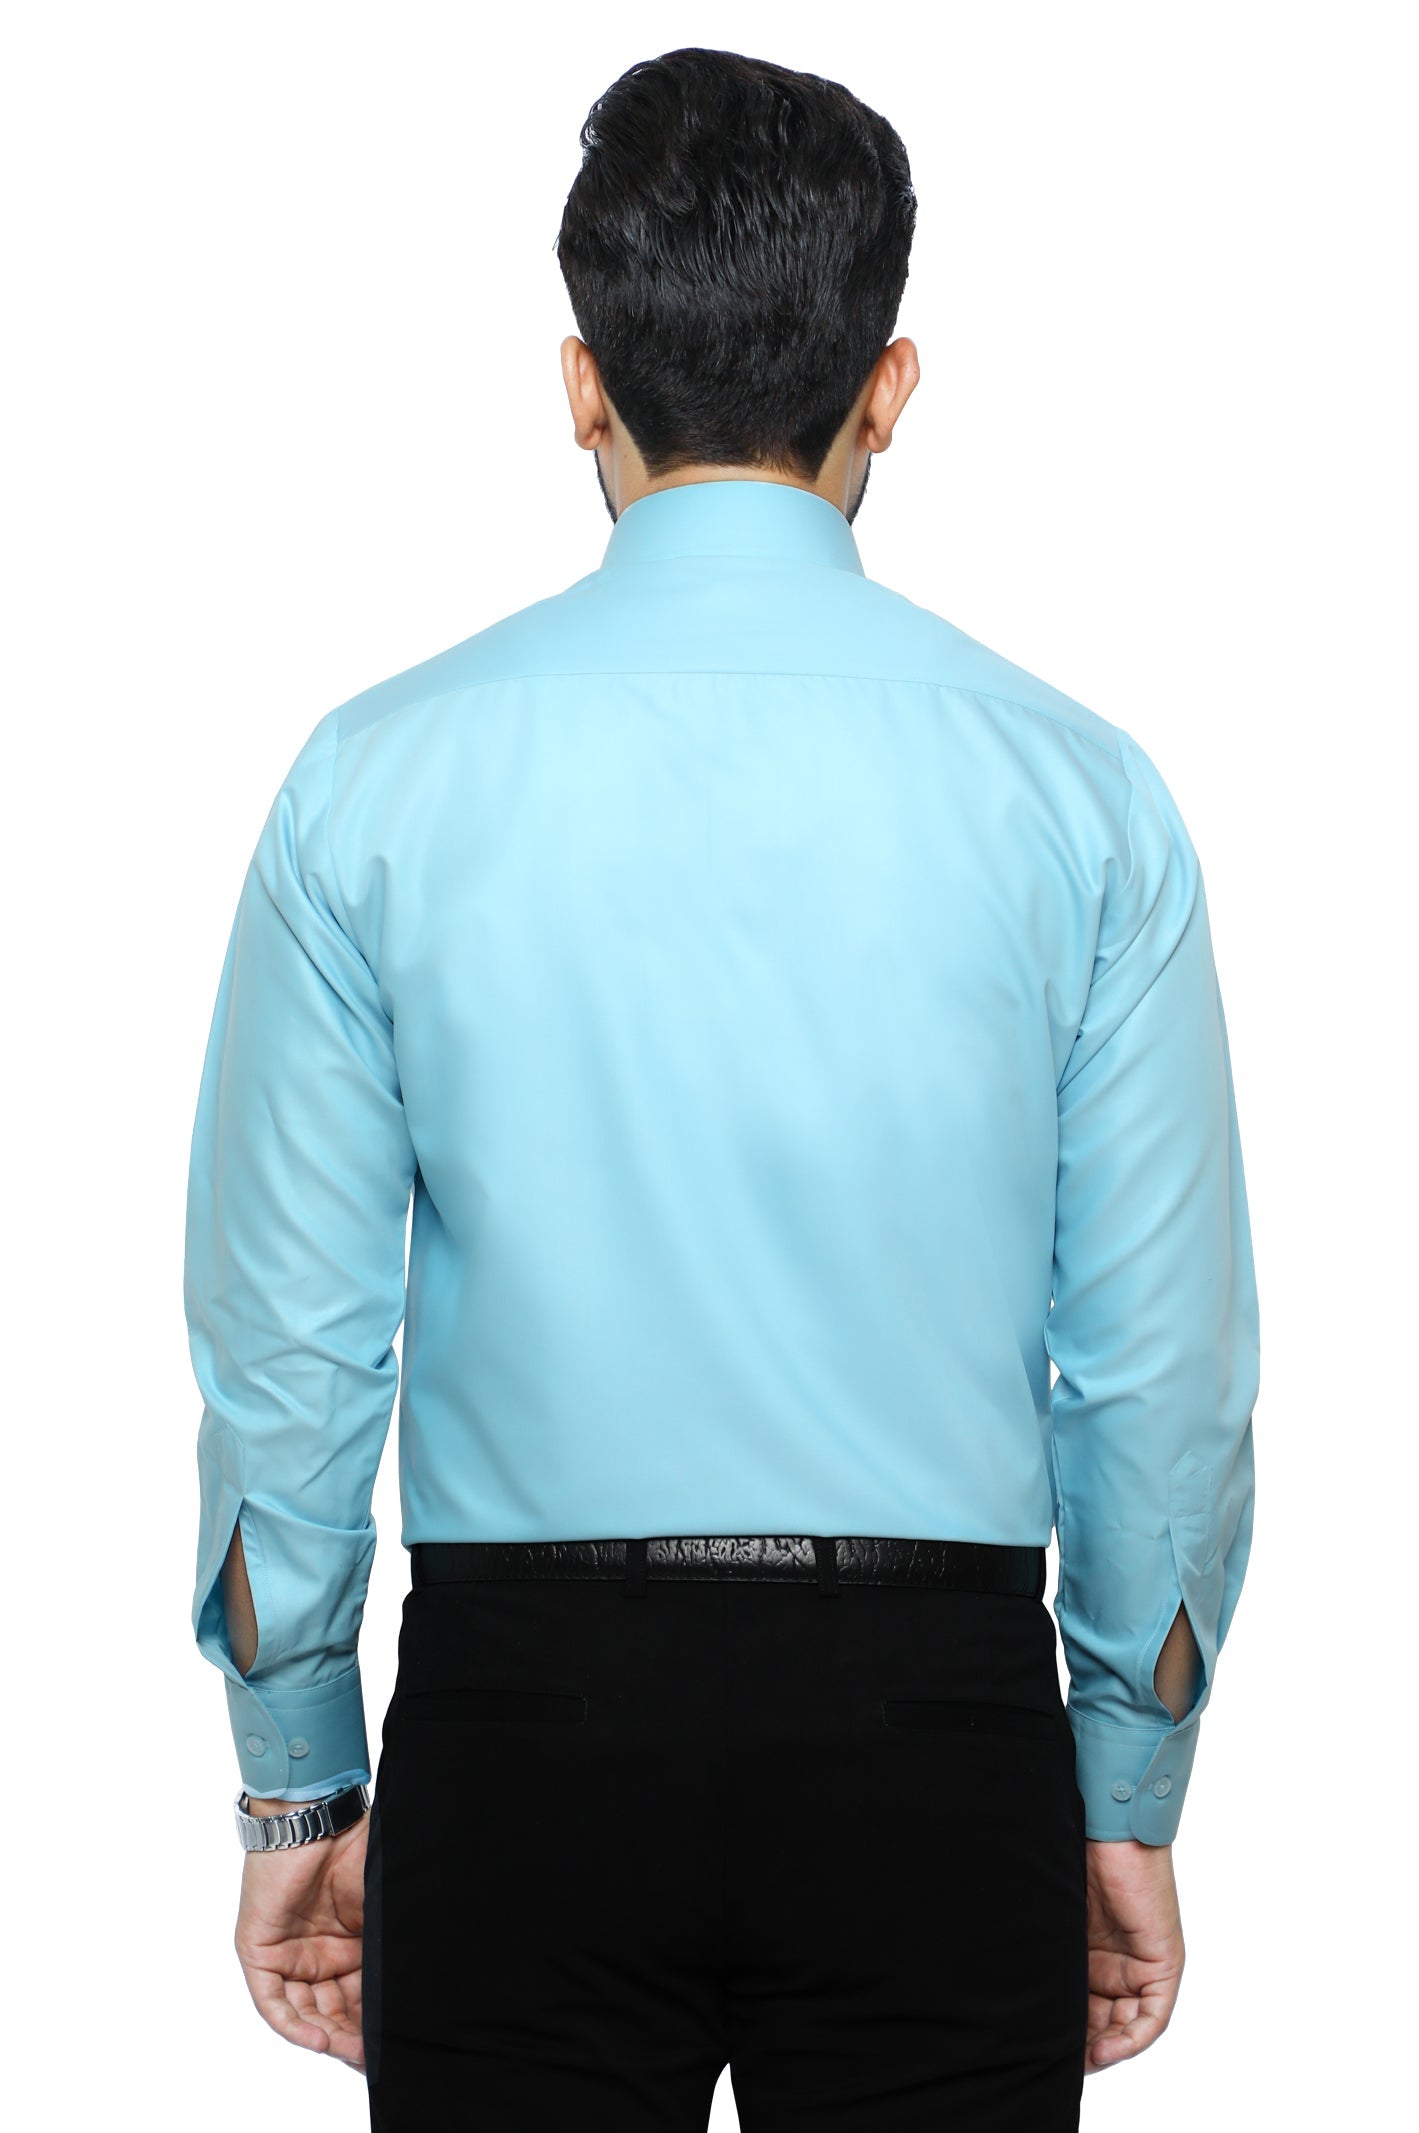 Formal Man Shirt in Teal SKU: AB2271-Teal - Diners